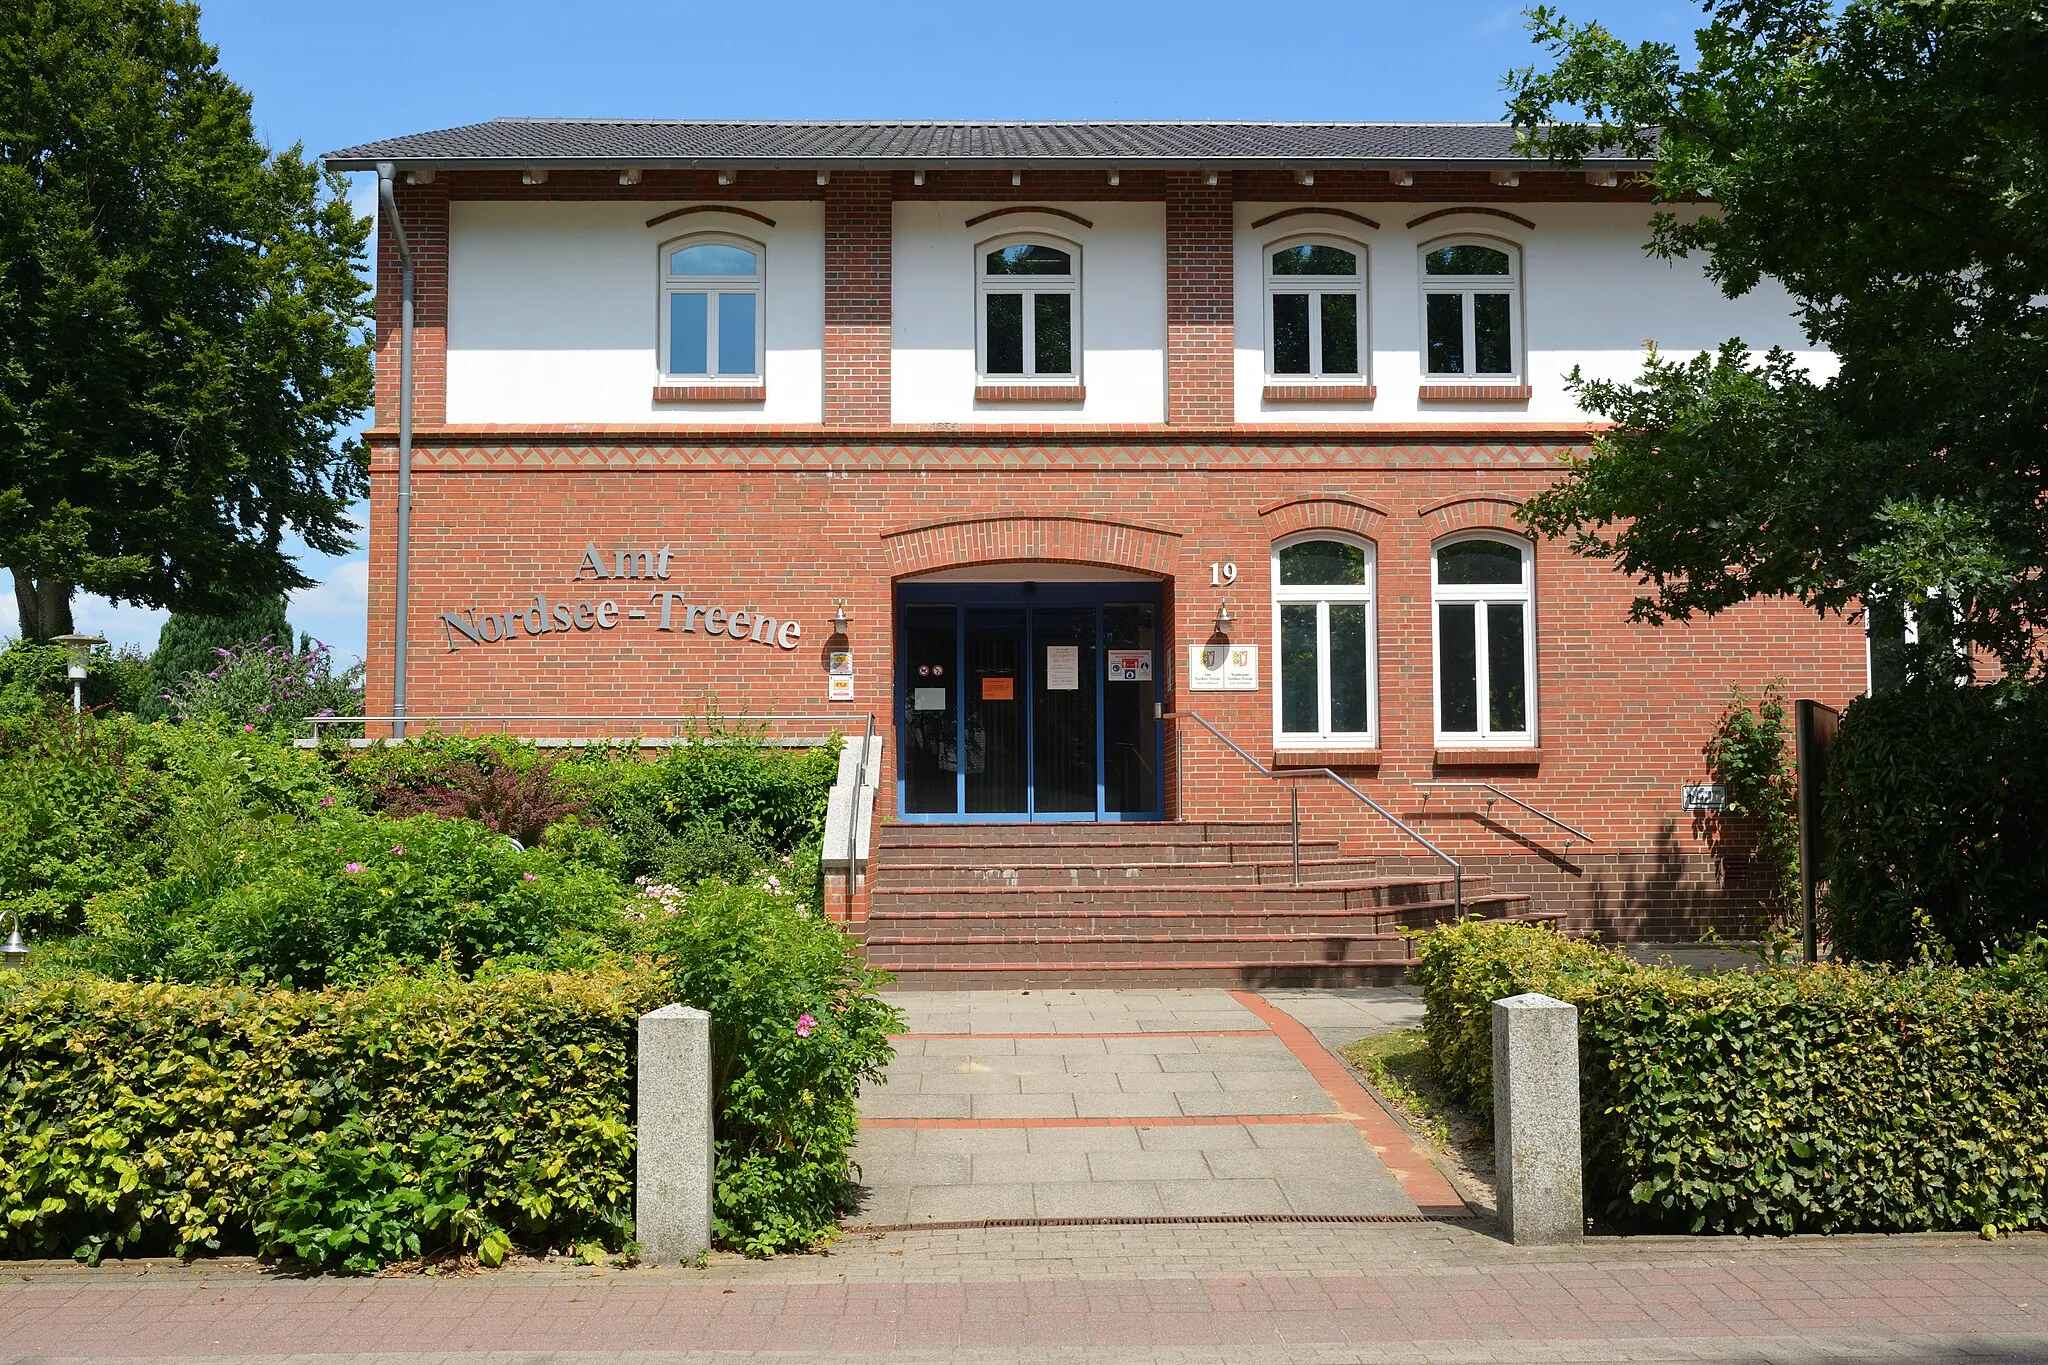 Photo showing: Das Amtsgebäude Nordsee-Treene in Mildstedt